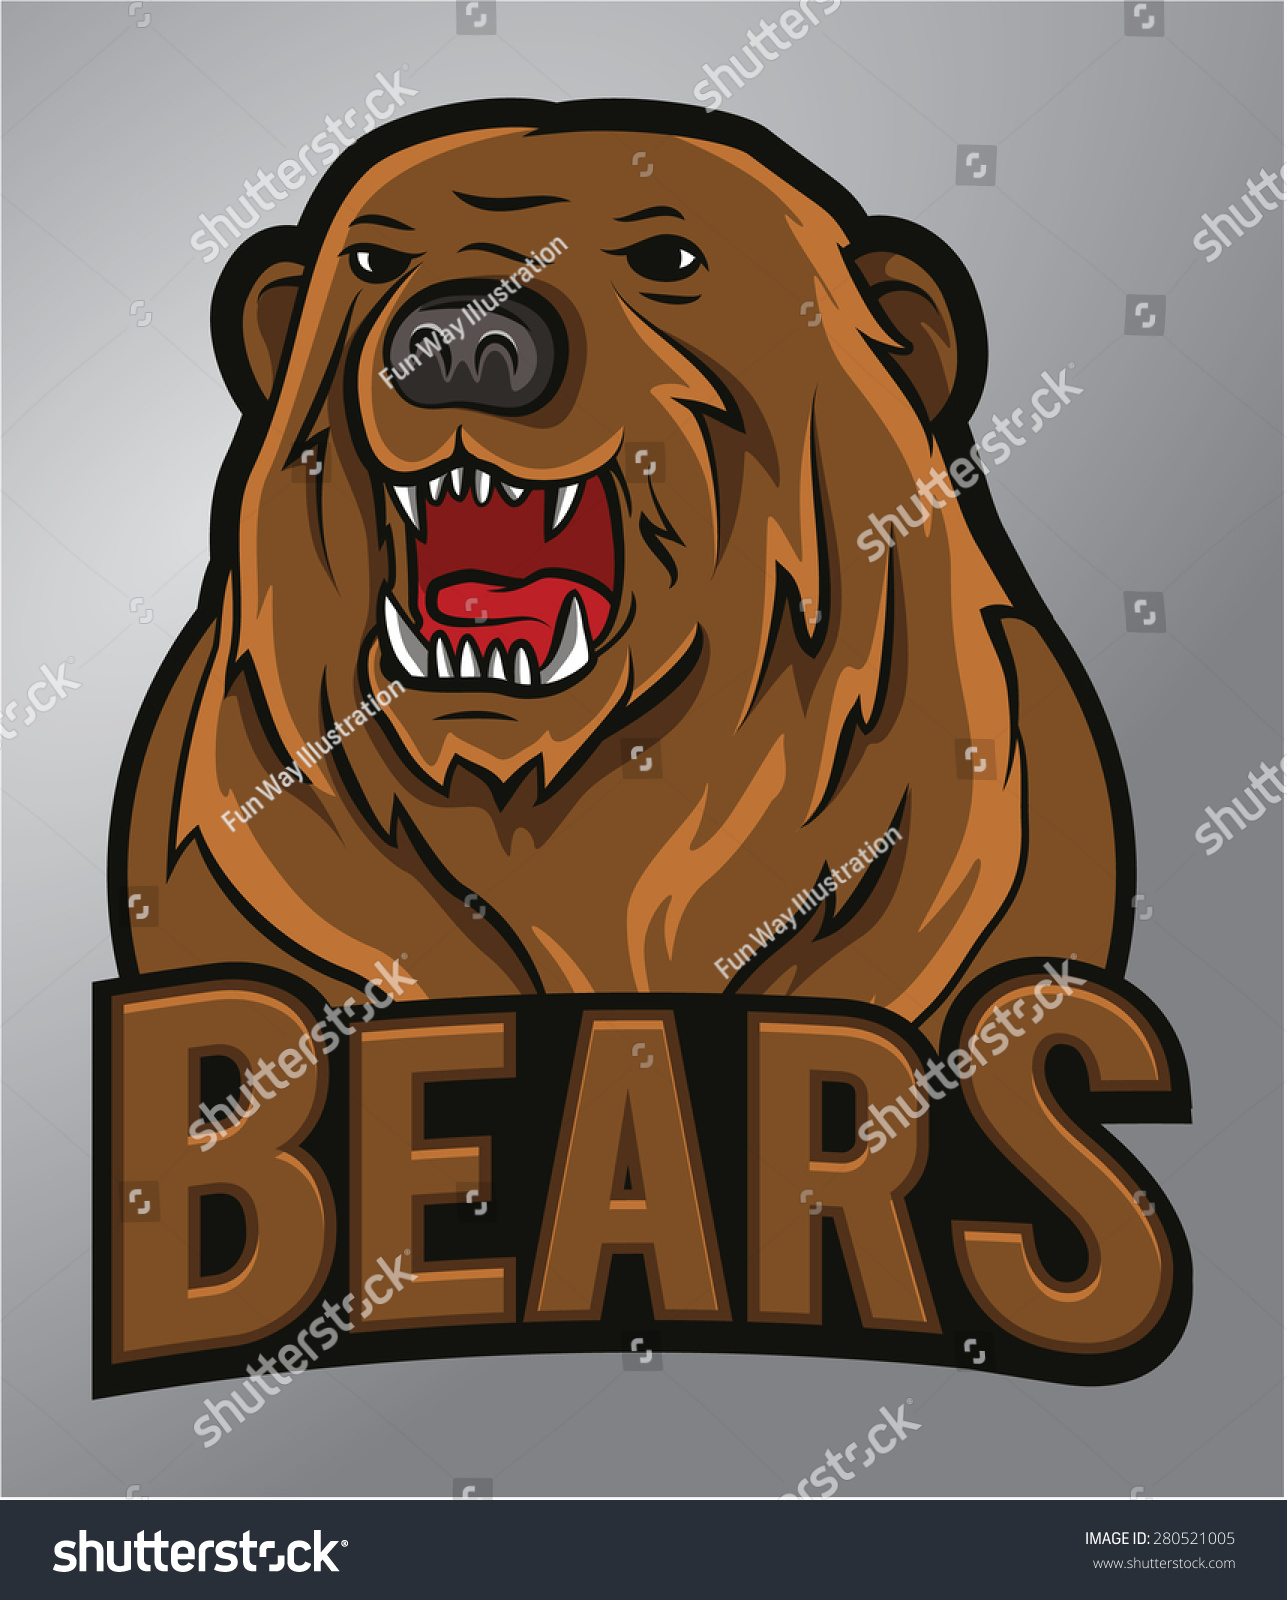 Bears Mascot Stock Vector 280521005 - Shutterstock